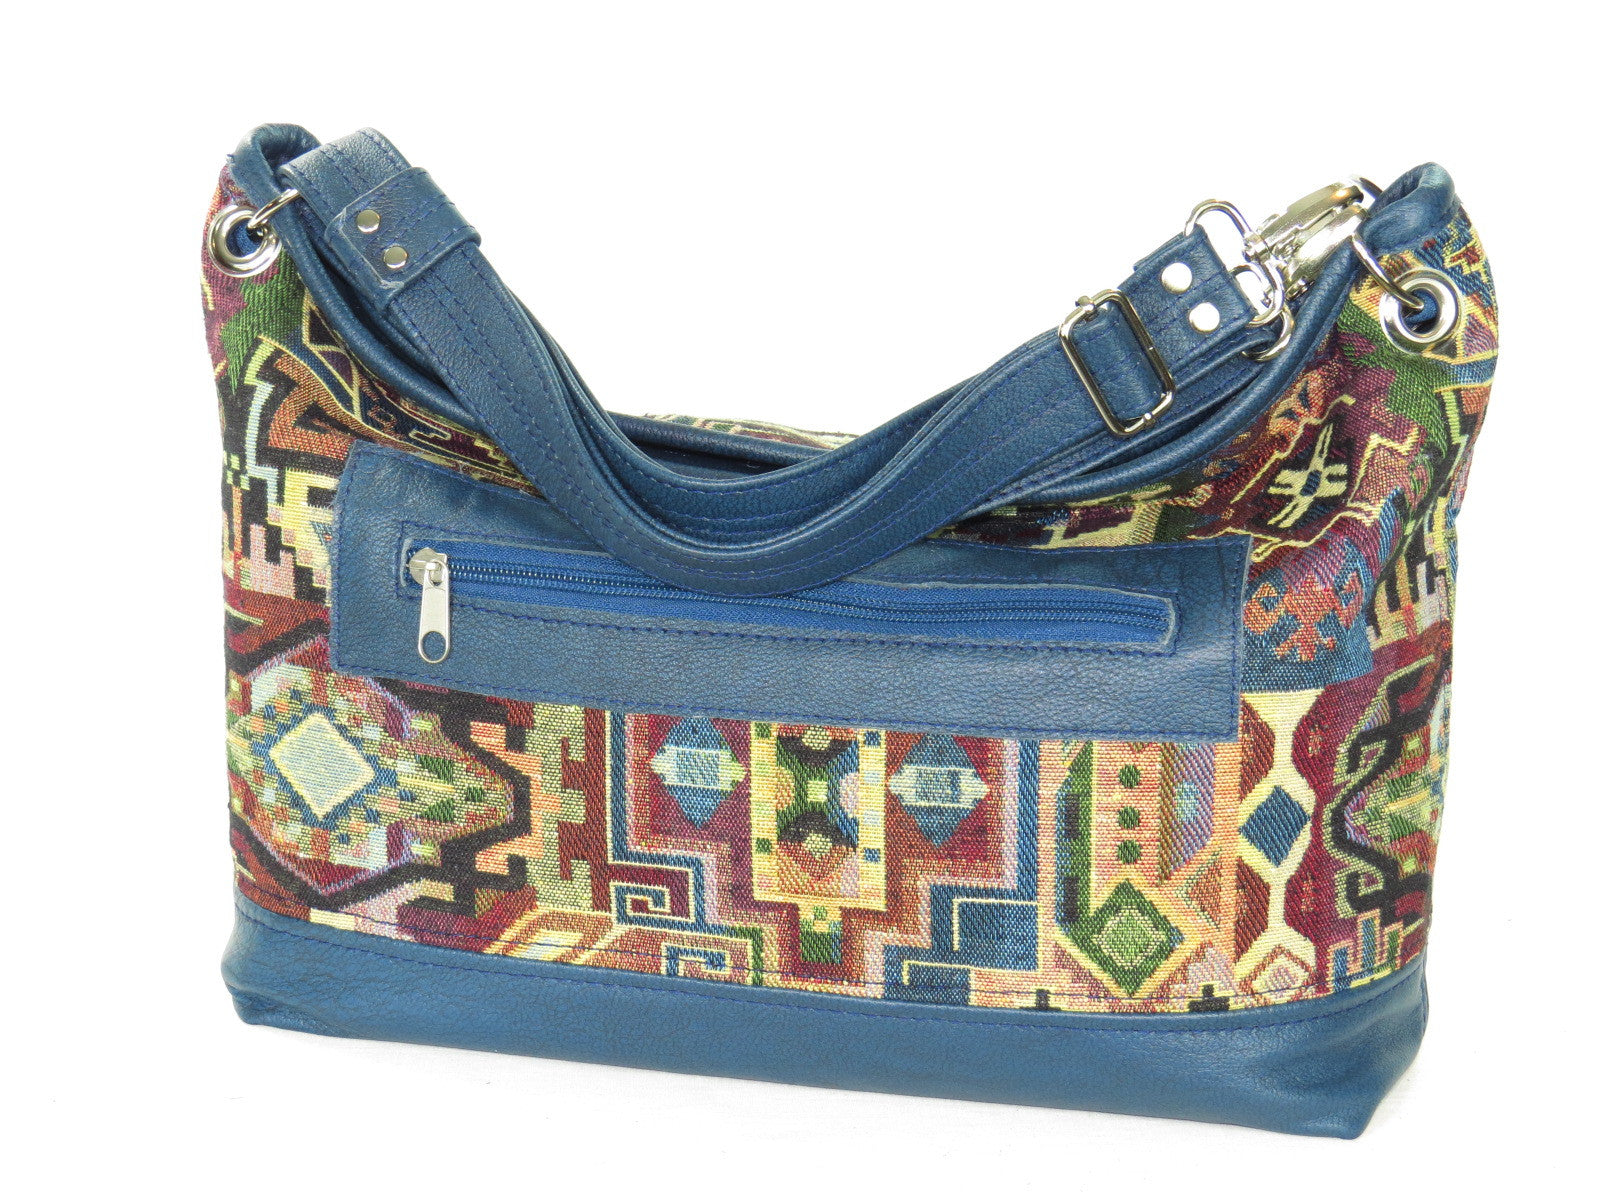 Basic and Practical Handbag strap options